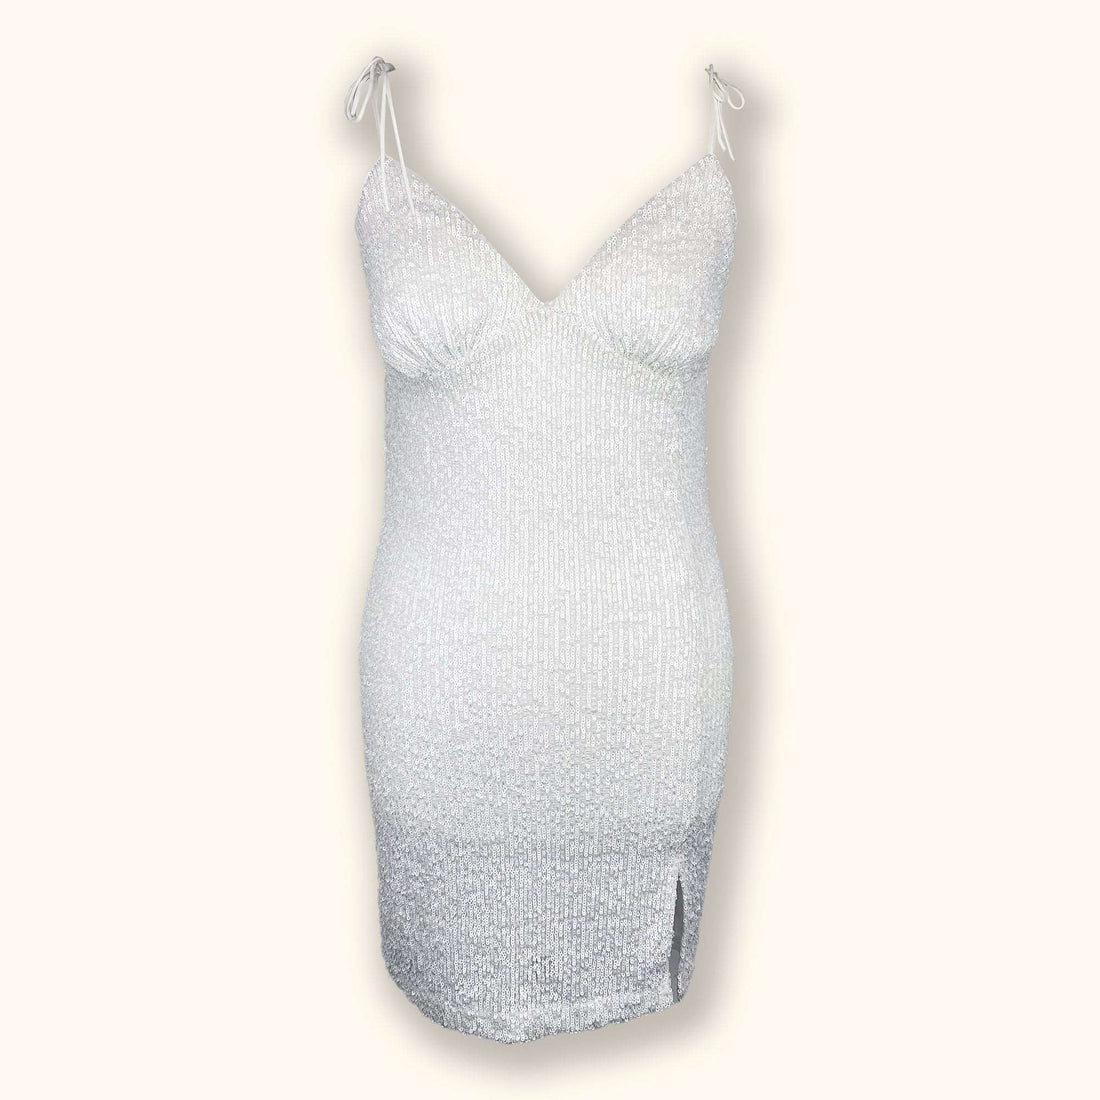 Topshop White Sequin Cami Mini Dress - Size 10 - Topshop - Dresses